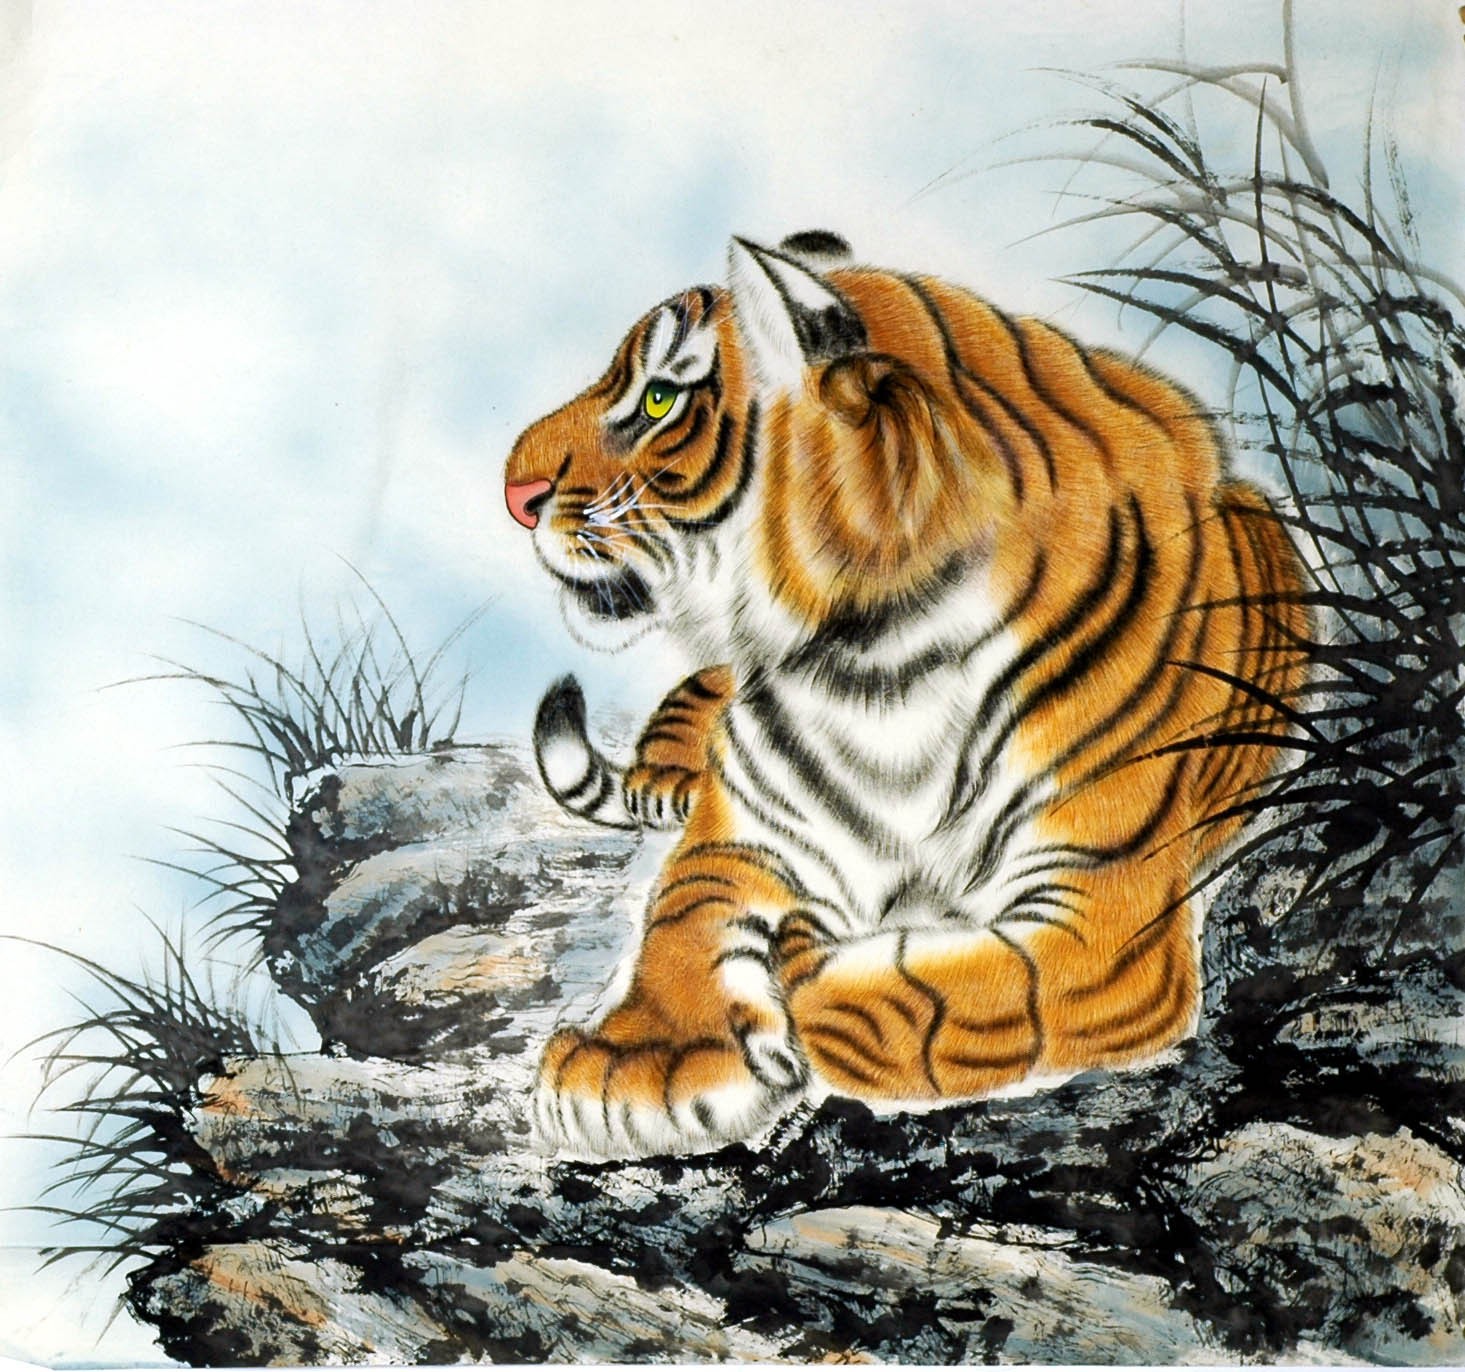 Chinese Tiger Painting - CNAG010005